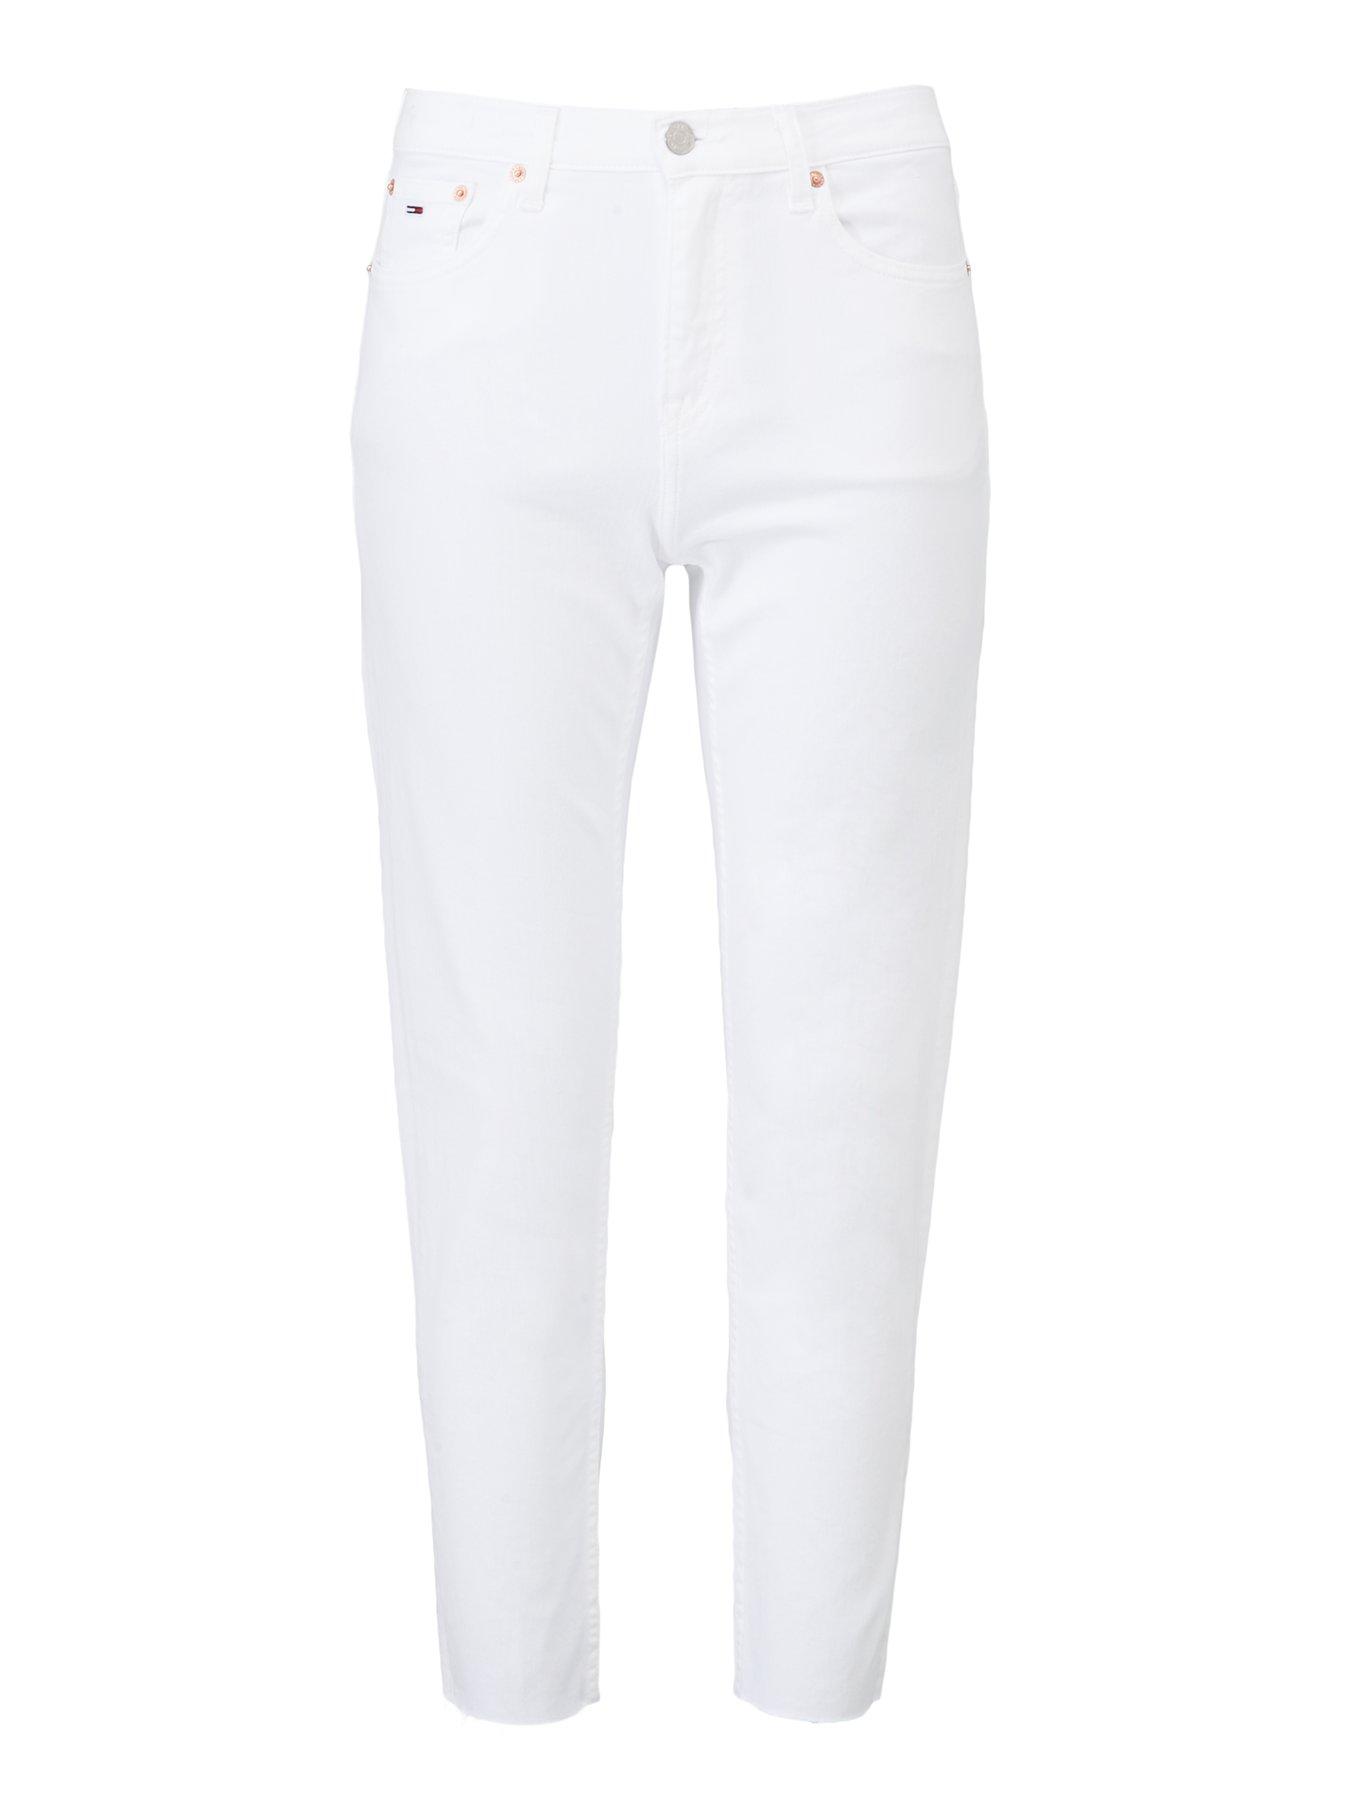 ladies white jeans uk